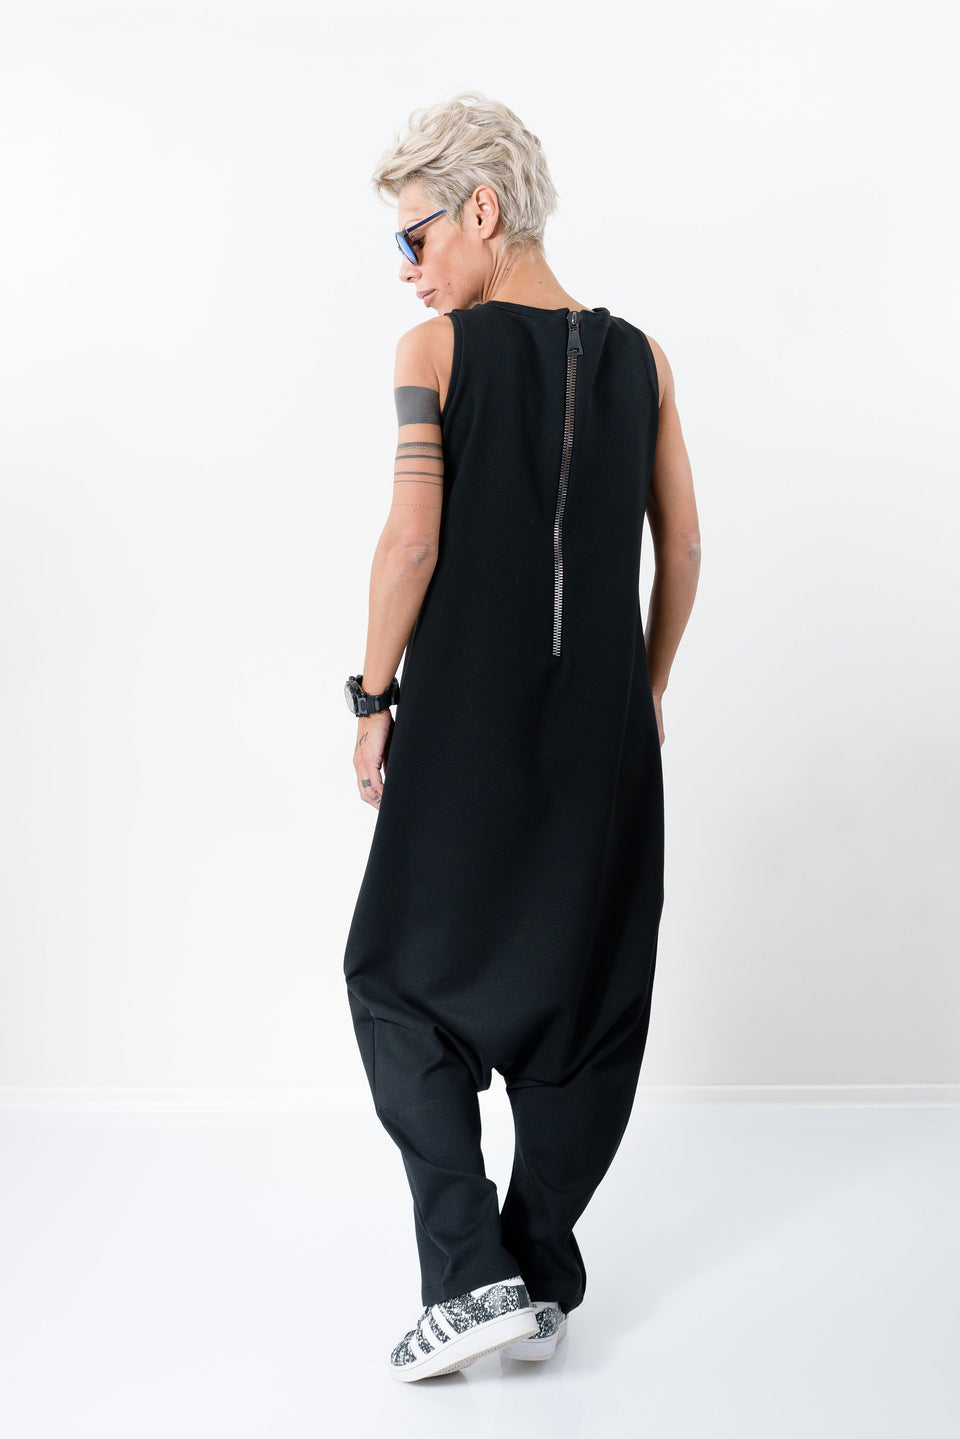 Black Harem Jumpsuit with Front Pocket - Clothes By Locker Room